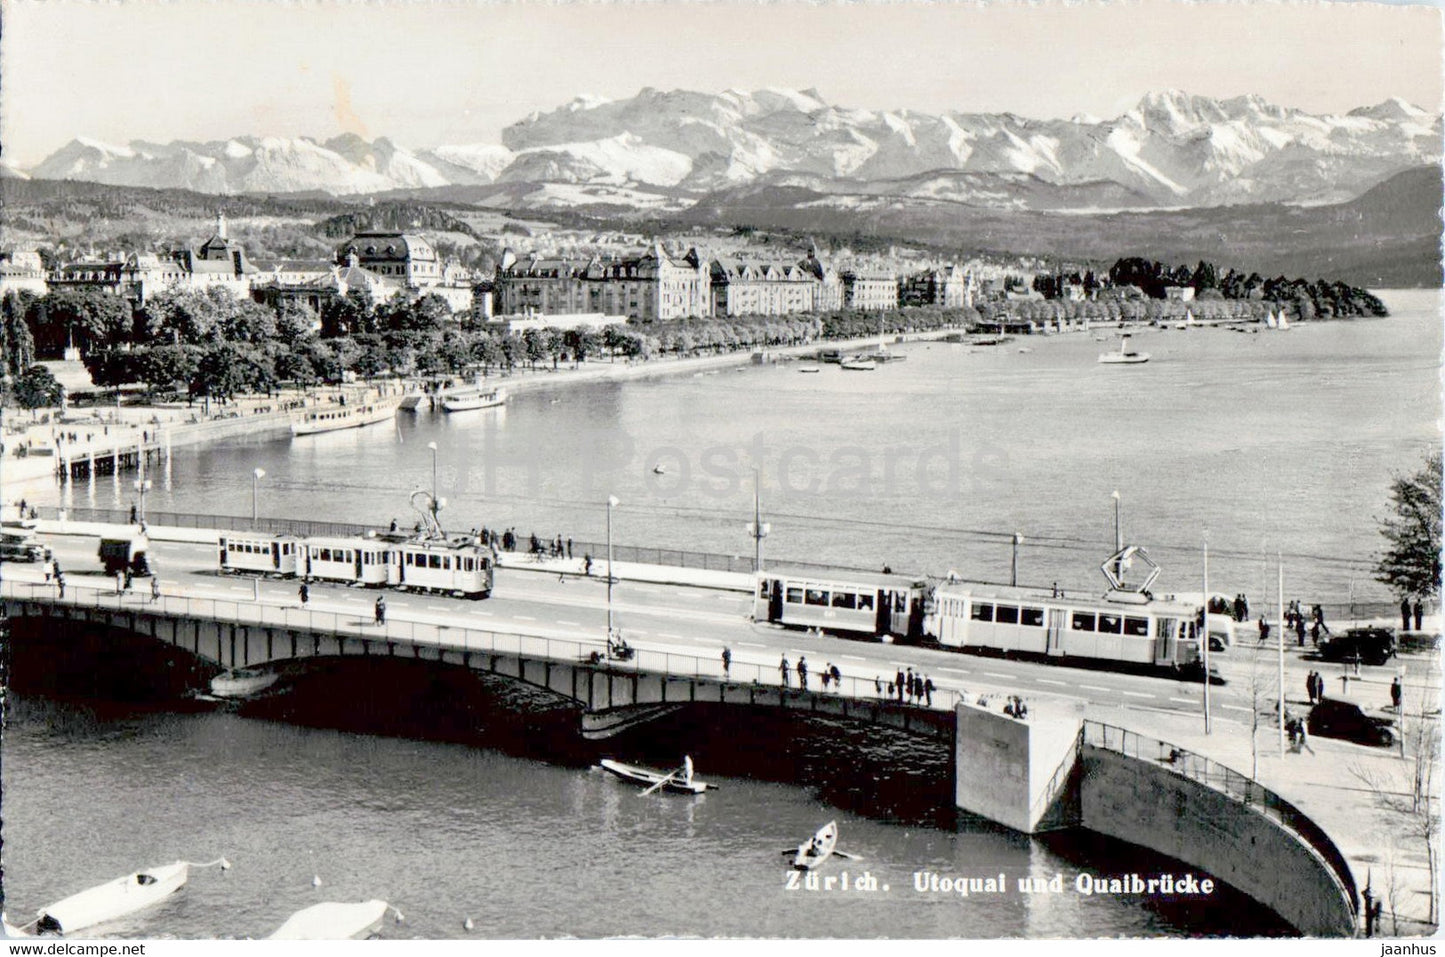 Zurich - Utoquai und Quaibrucke - tram - bridge - 2139 - 1961 - Switzerland - used - JH Postcards